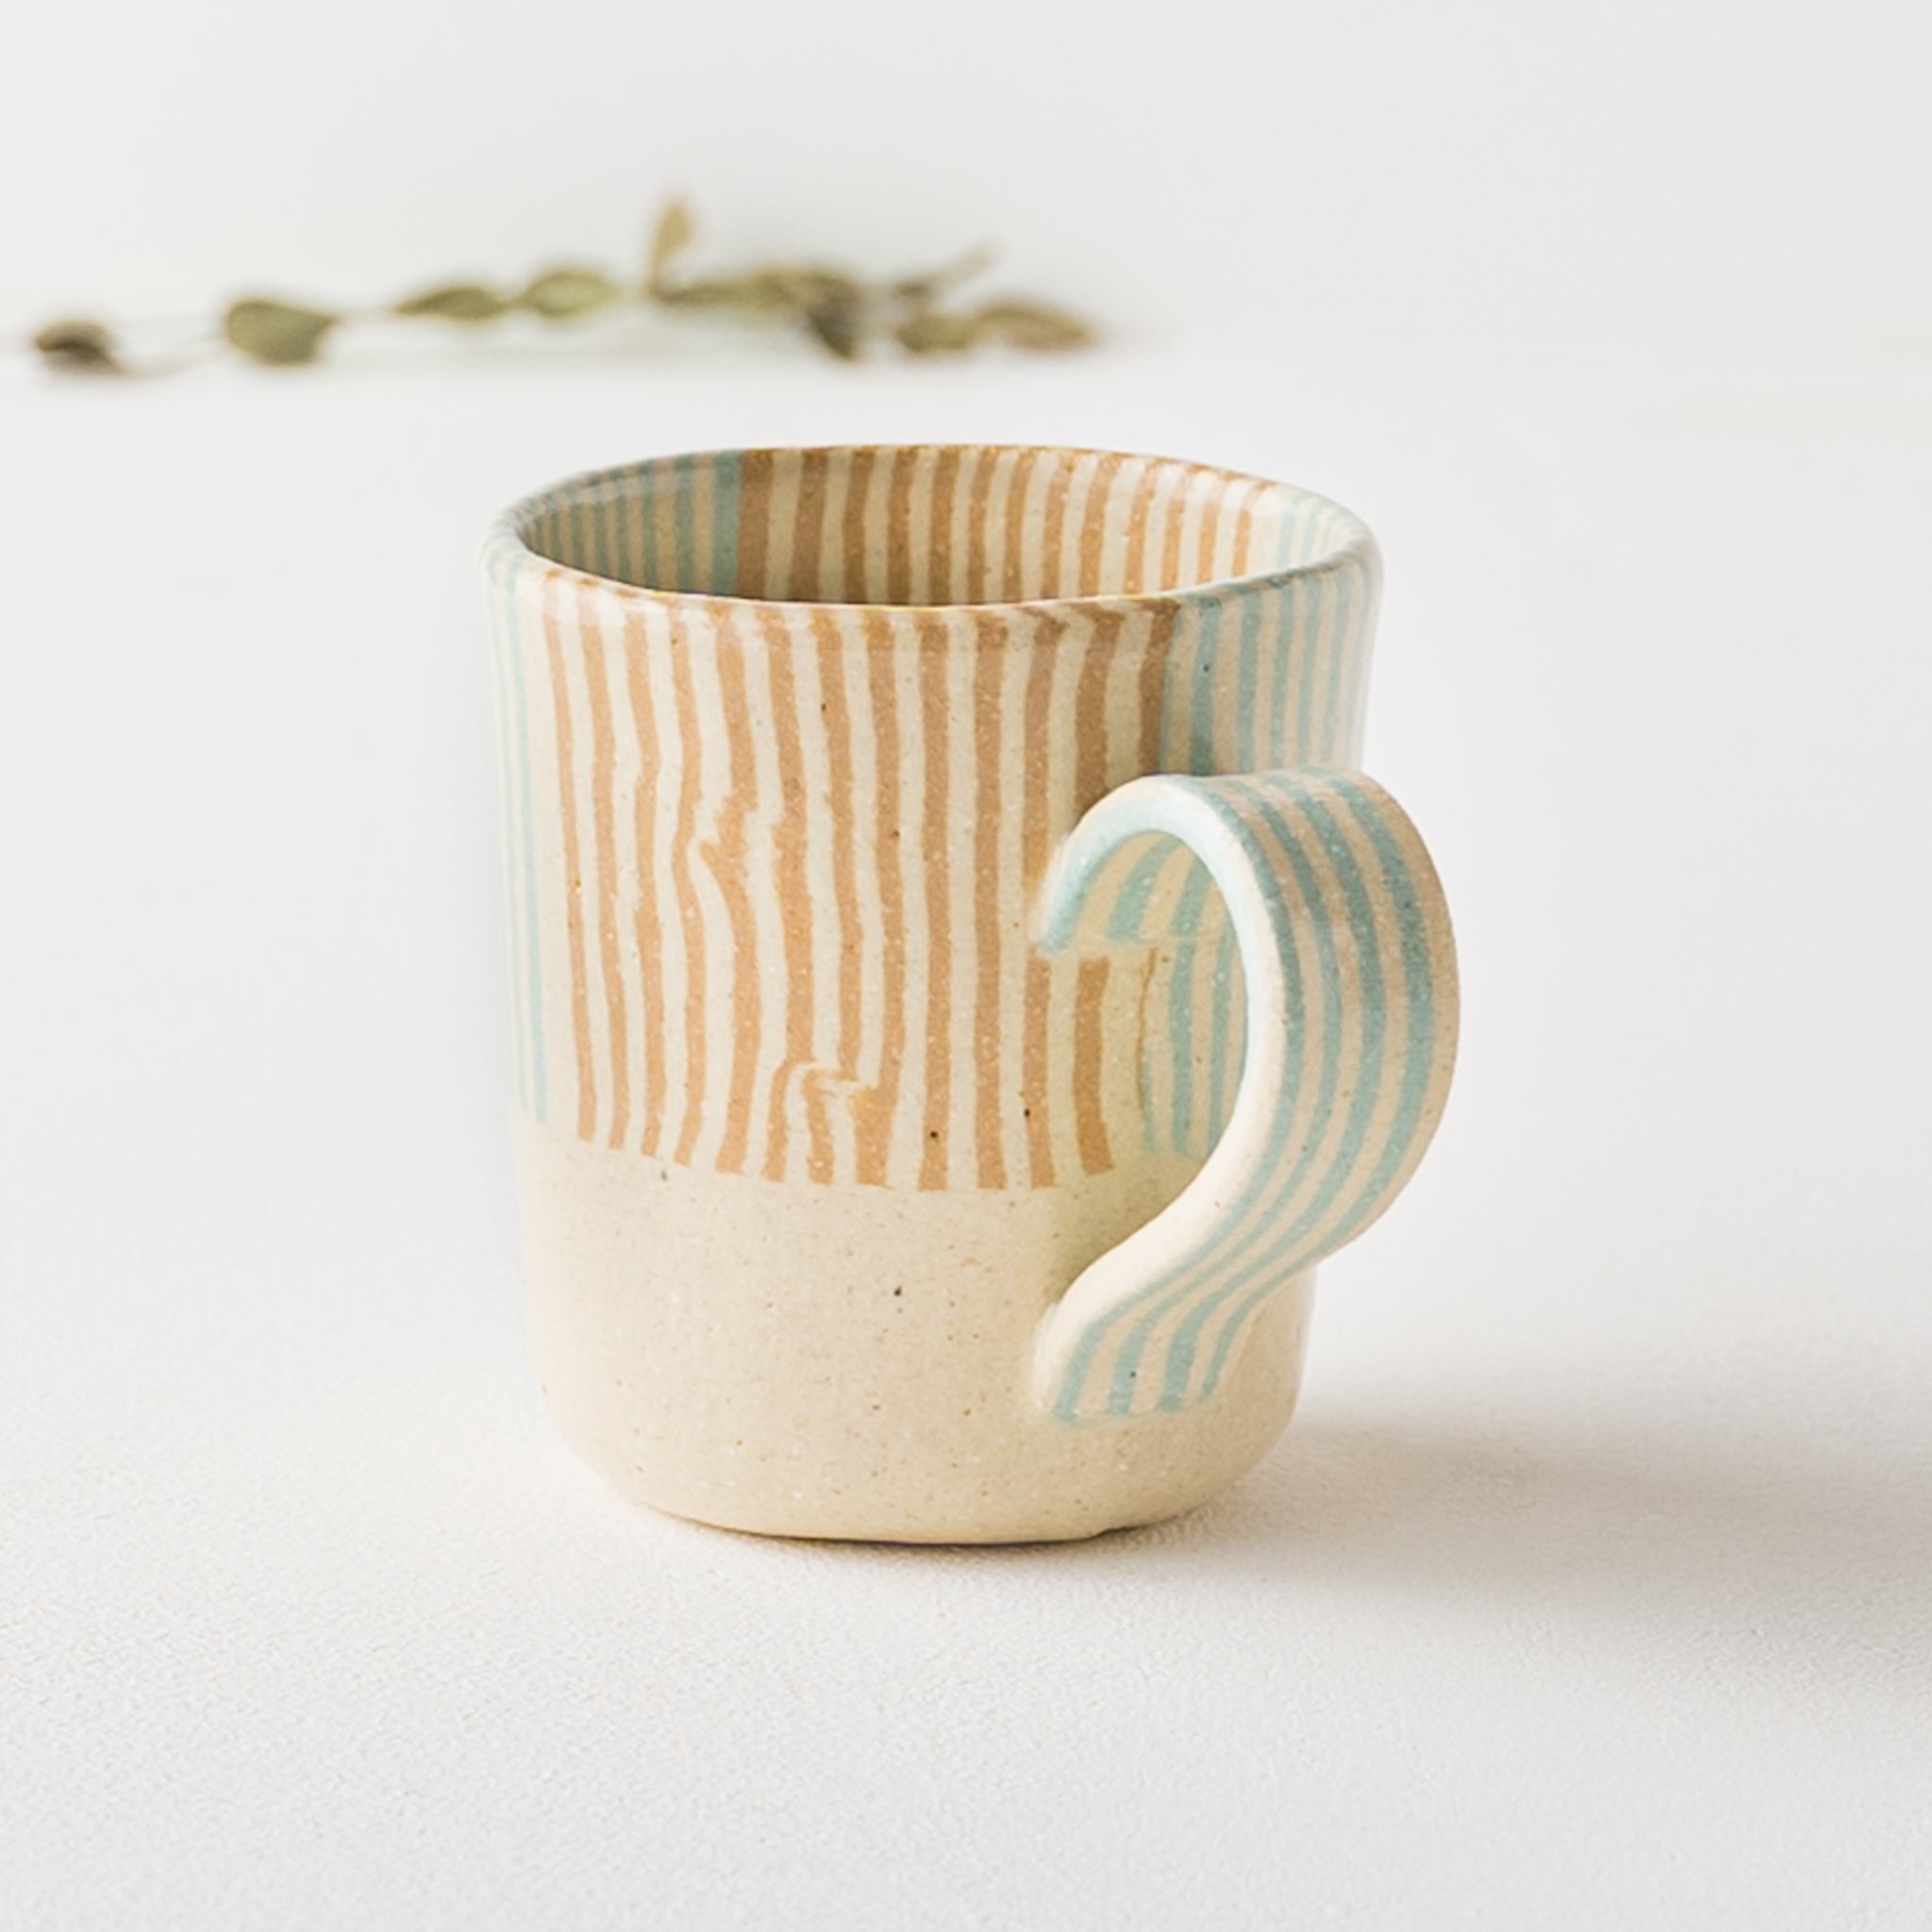 Hanako Sakashita's kneaded mug with stylish and cute staggered lines